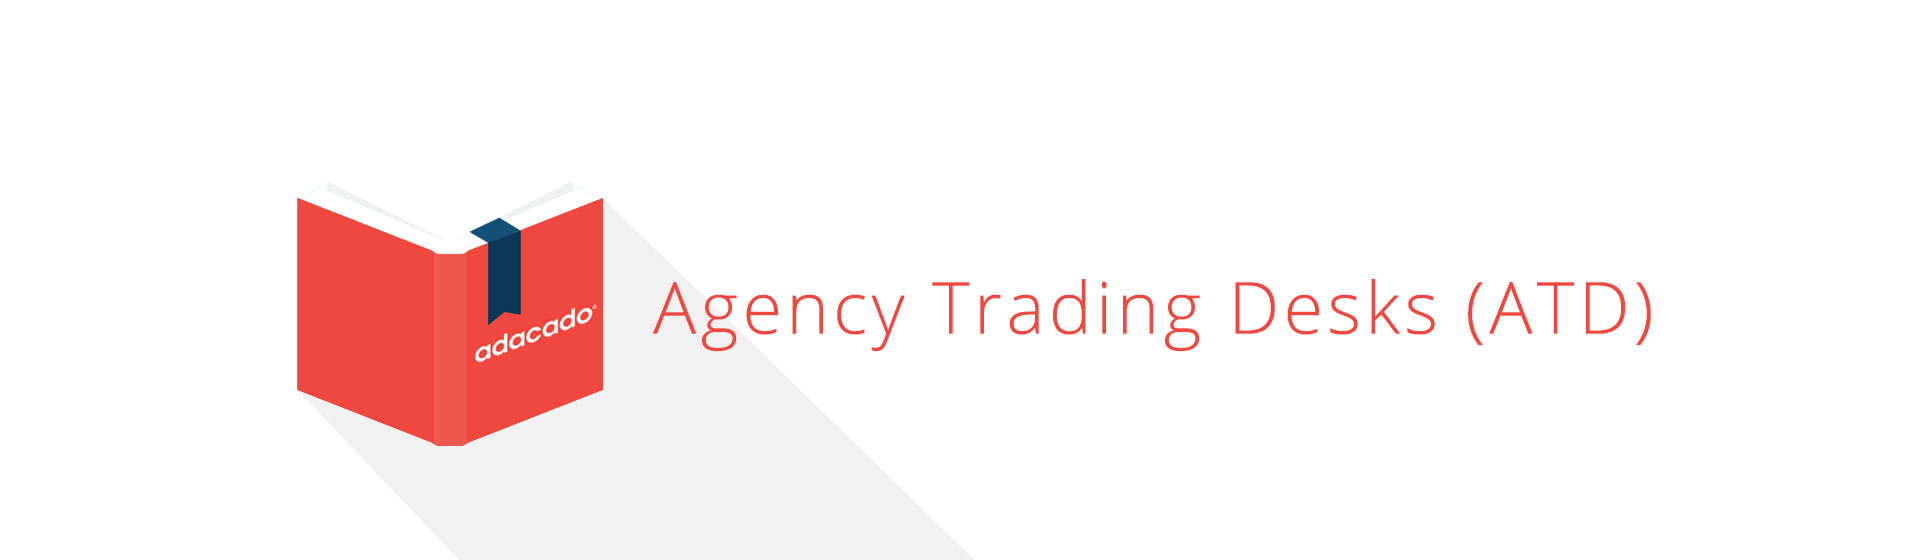 agency trading desks